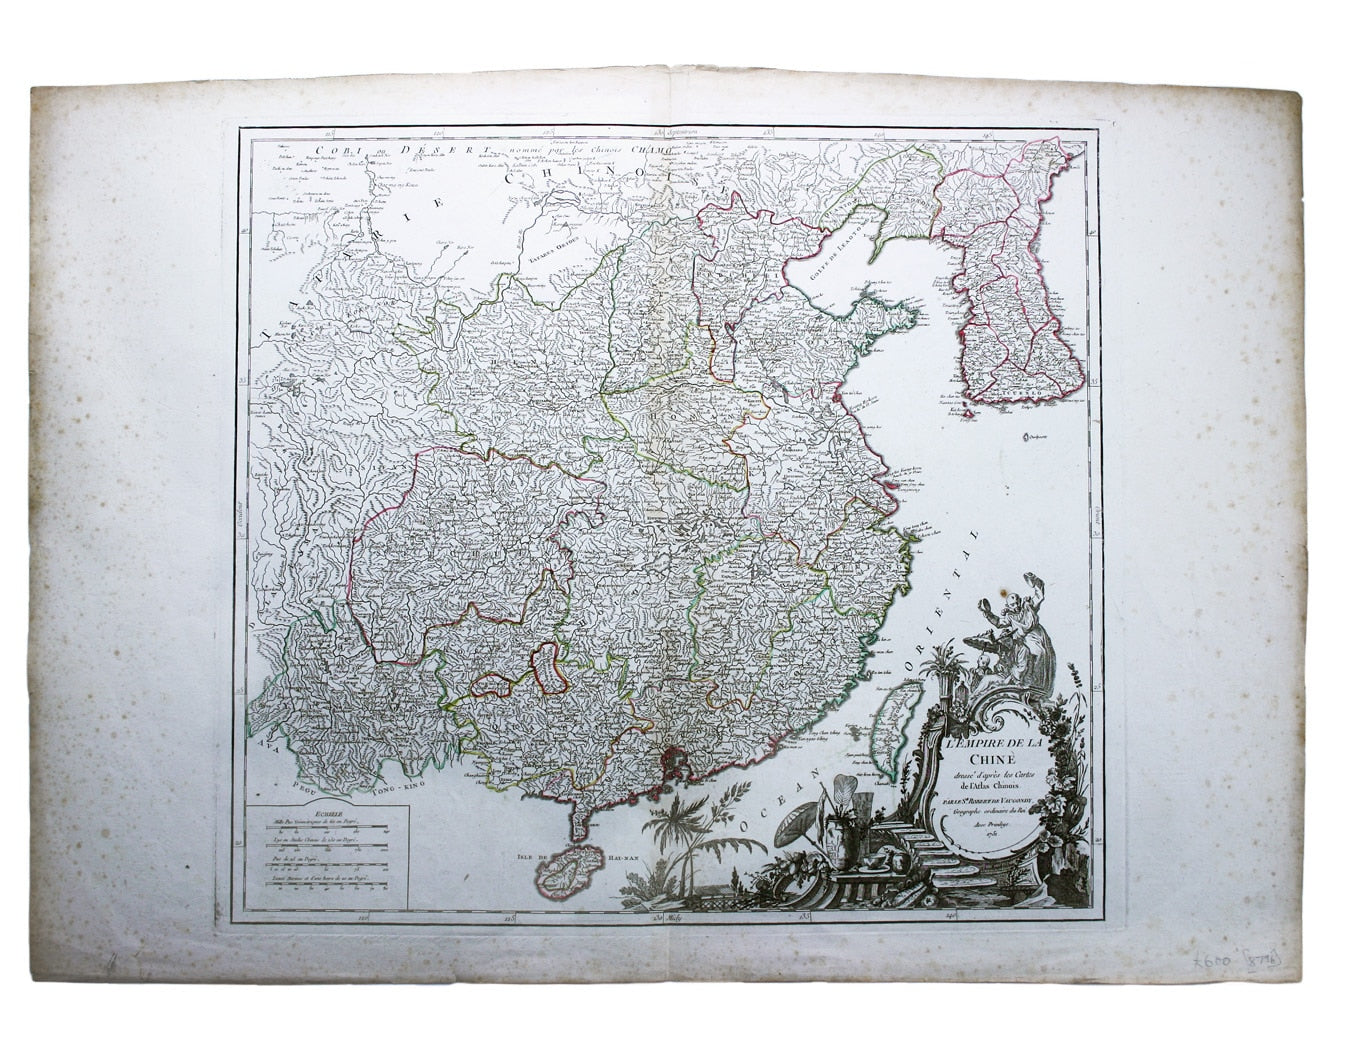 Robert de Vaugondy’s Map of China